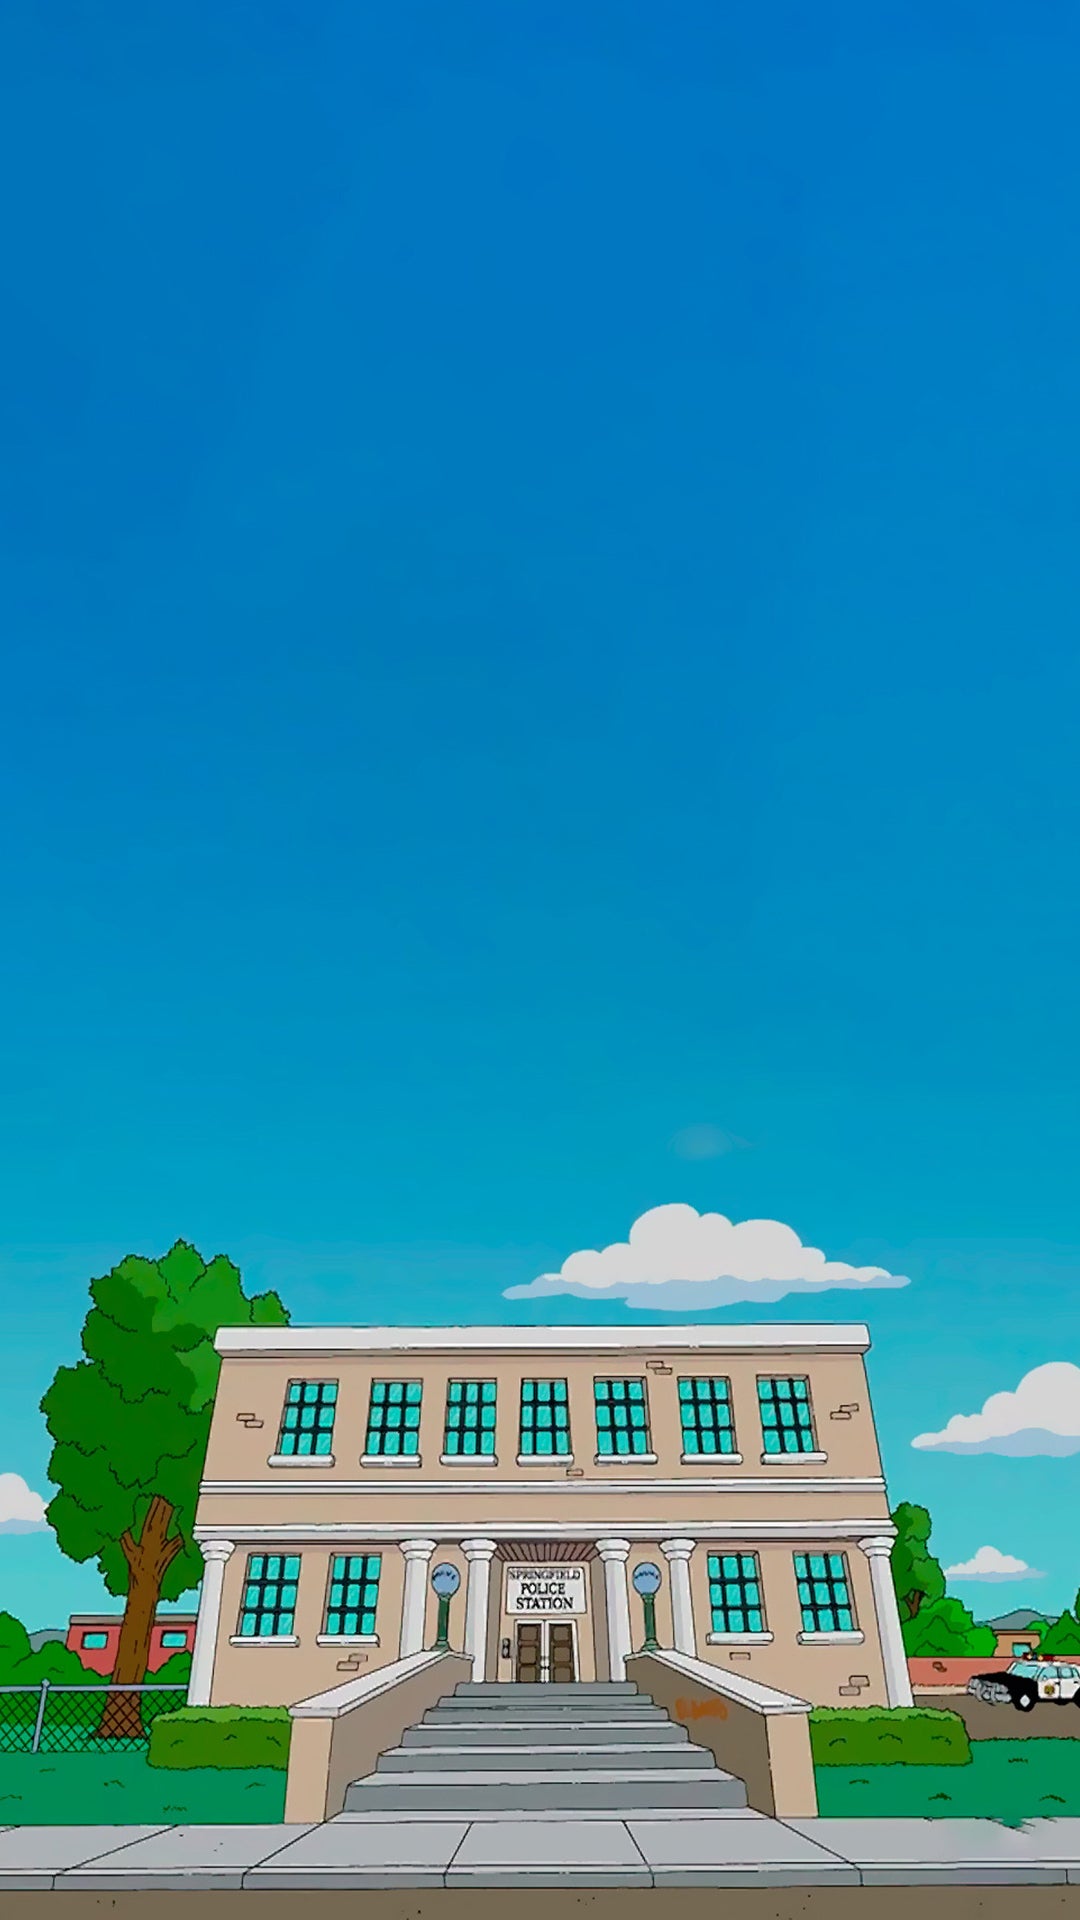 Le poste de Police de Springfield vue de face avec un grand ciel bleu.